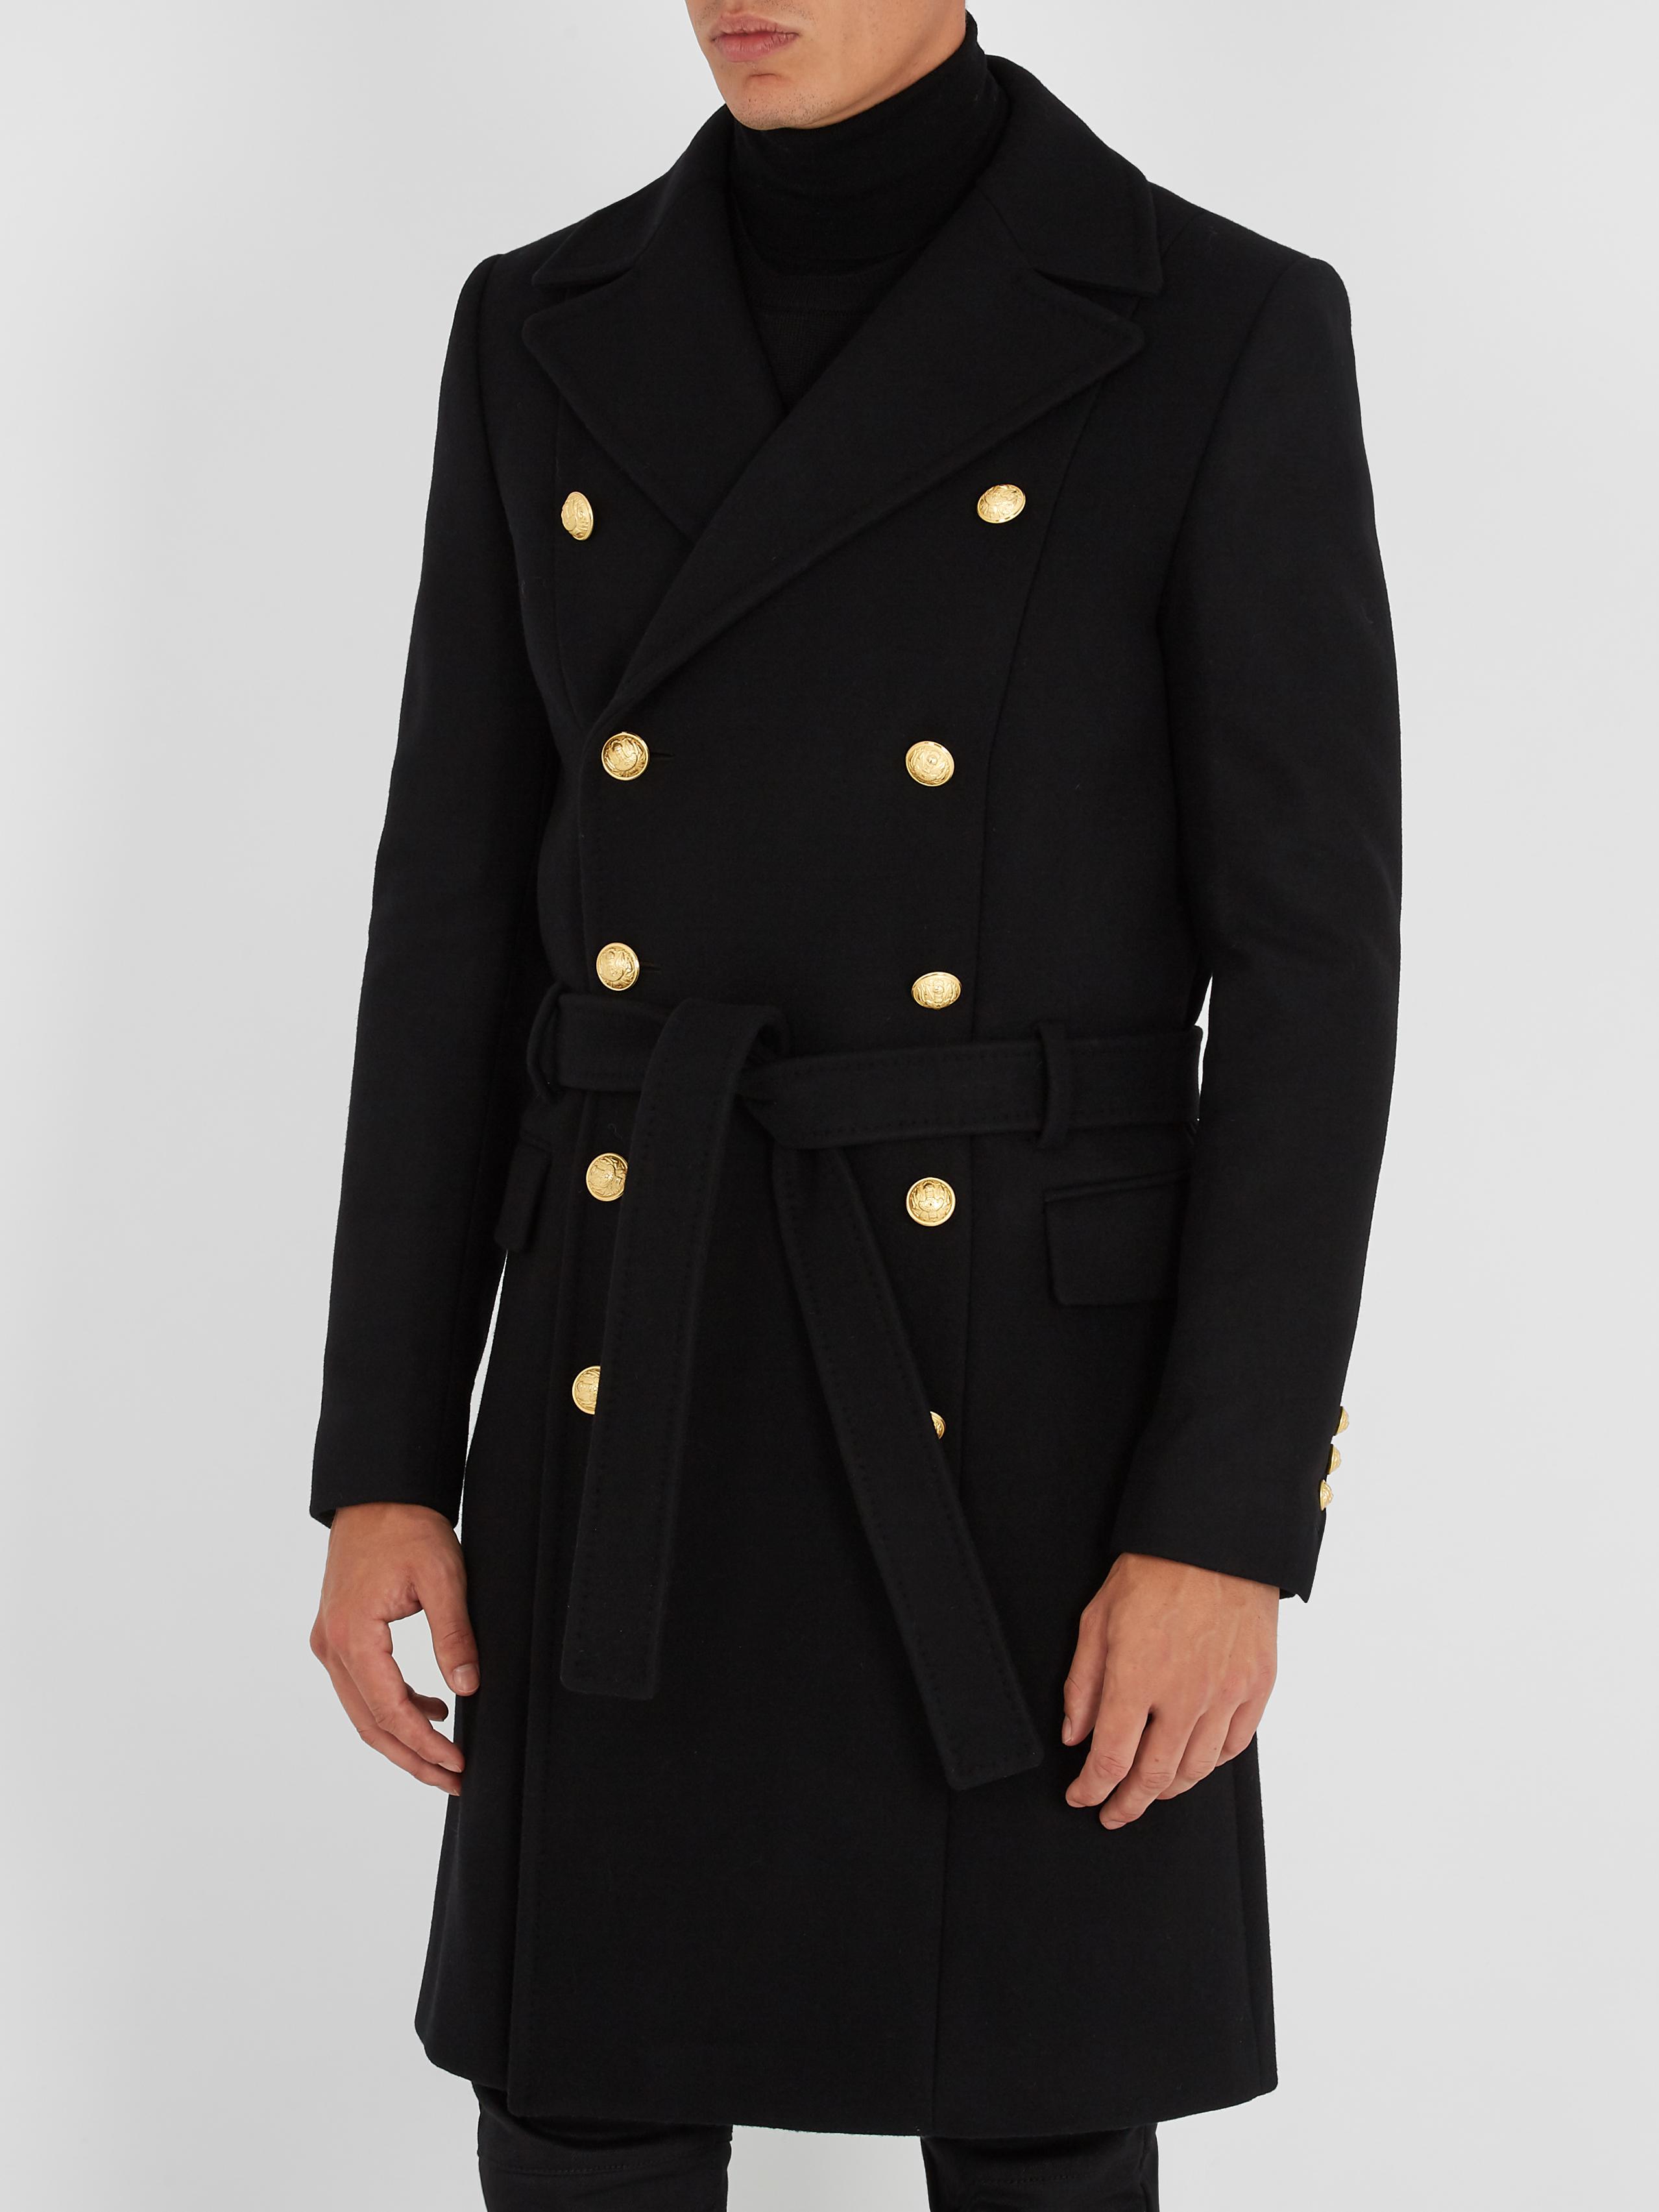 Balmain Double-breasted Wool-blend Military Coat in Black for Men | Lyst UK